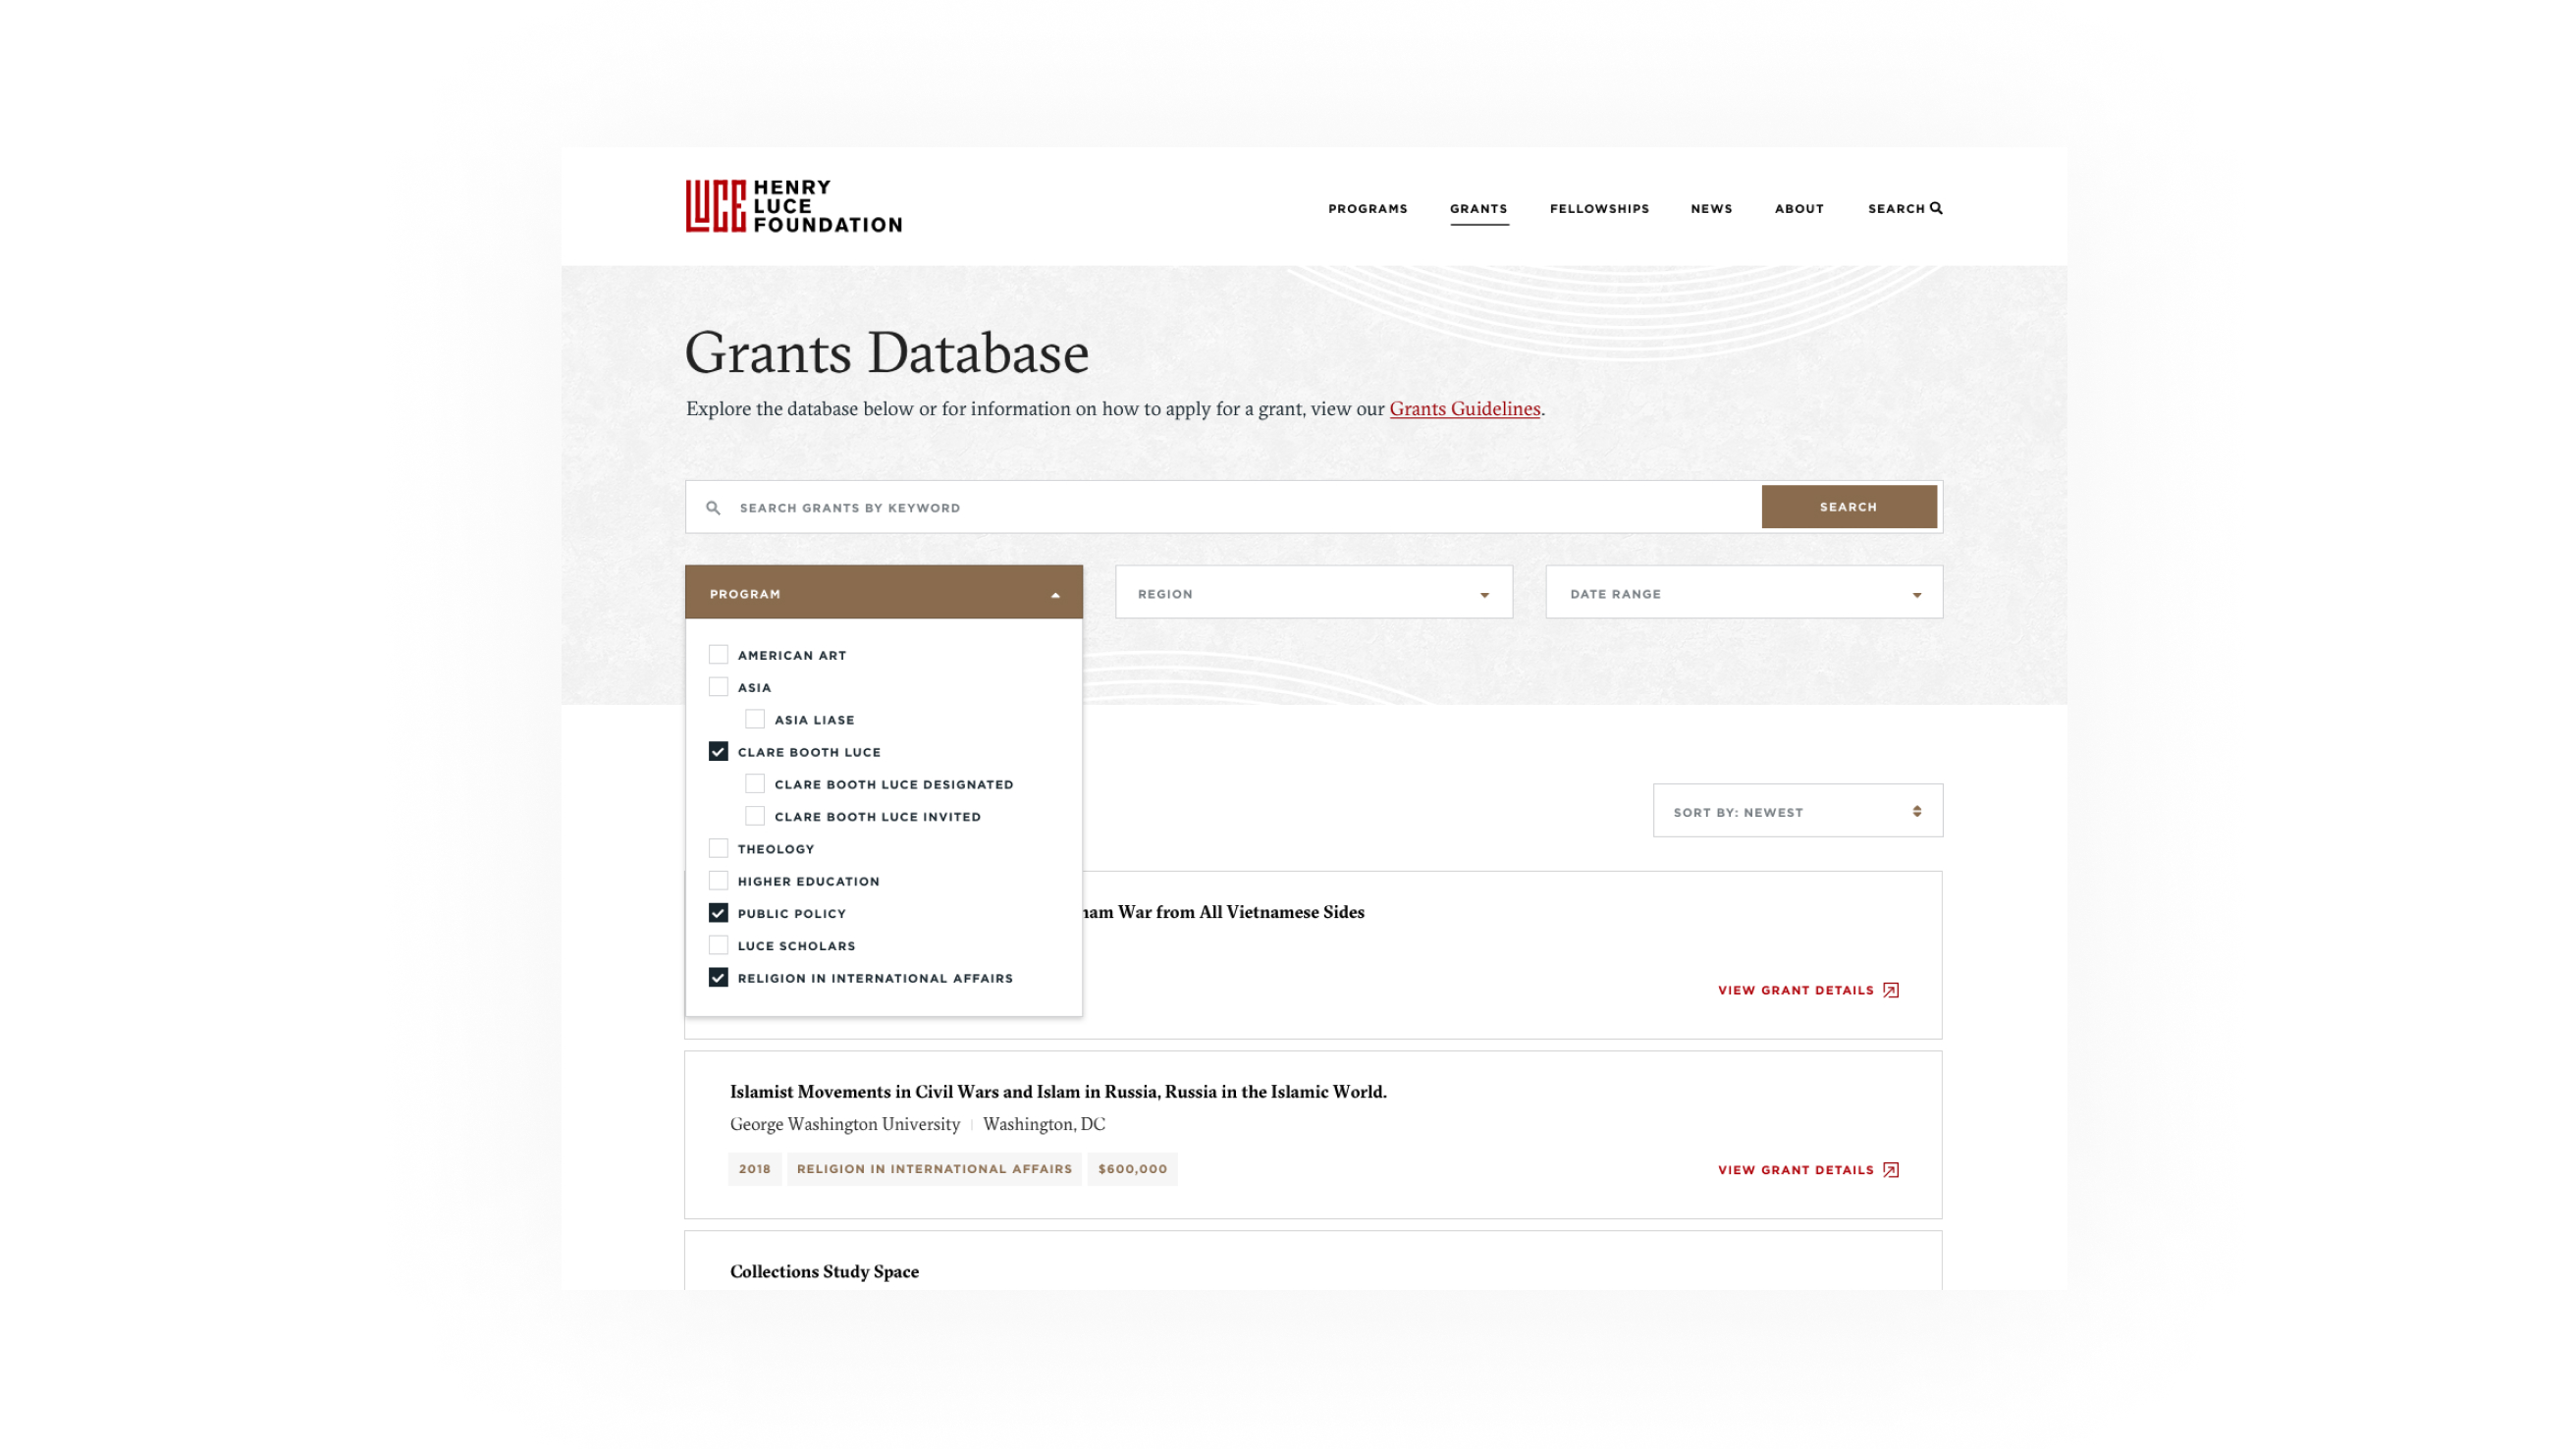 Henry Luce Foundation website grants database screenshot